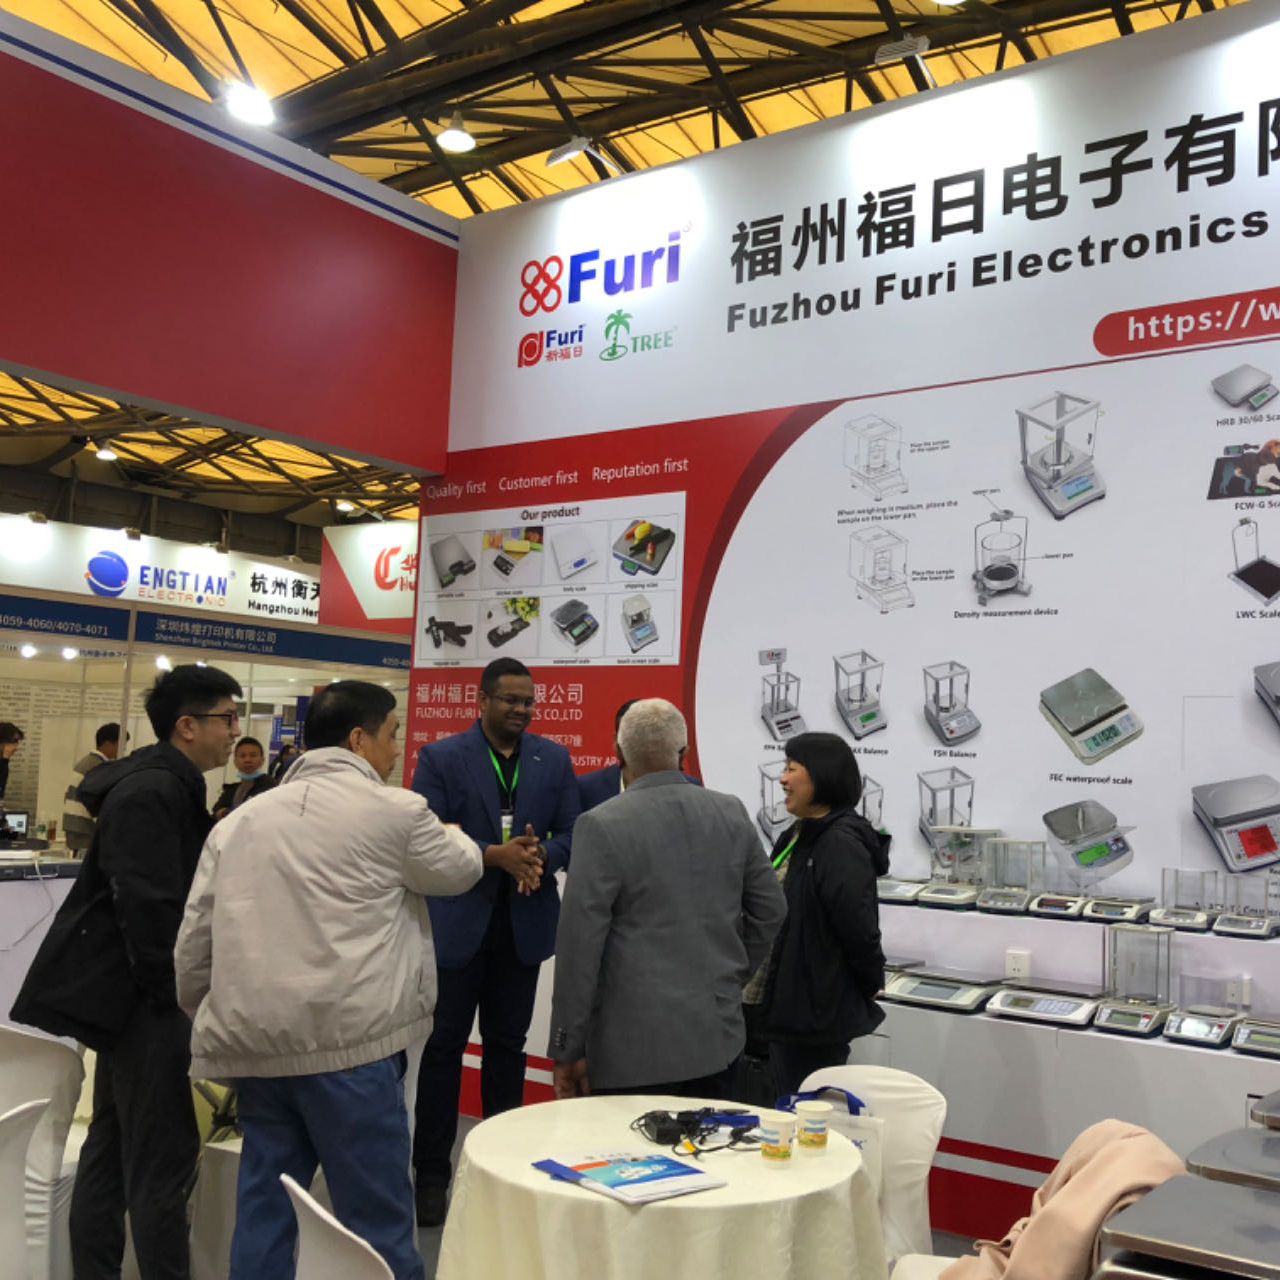 2023 (Shanghai) China International Weighing Instruments Exhibition - Fuzhou Furi Electronics Co., Ltd